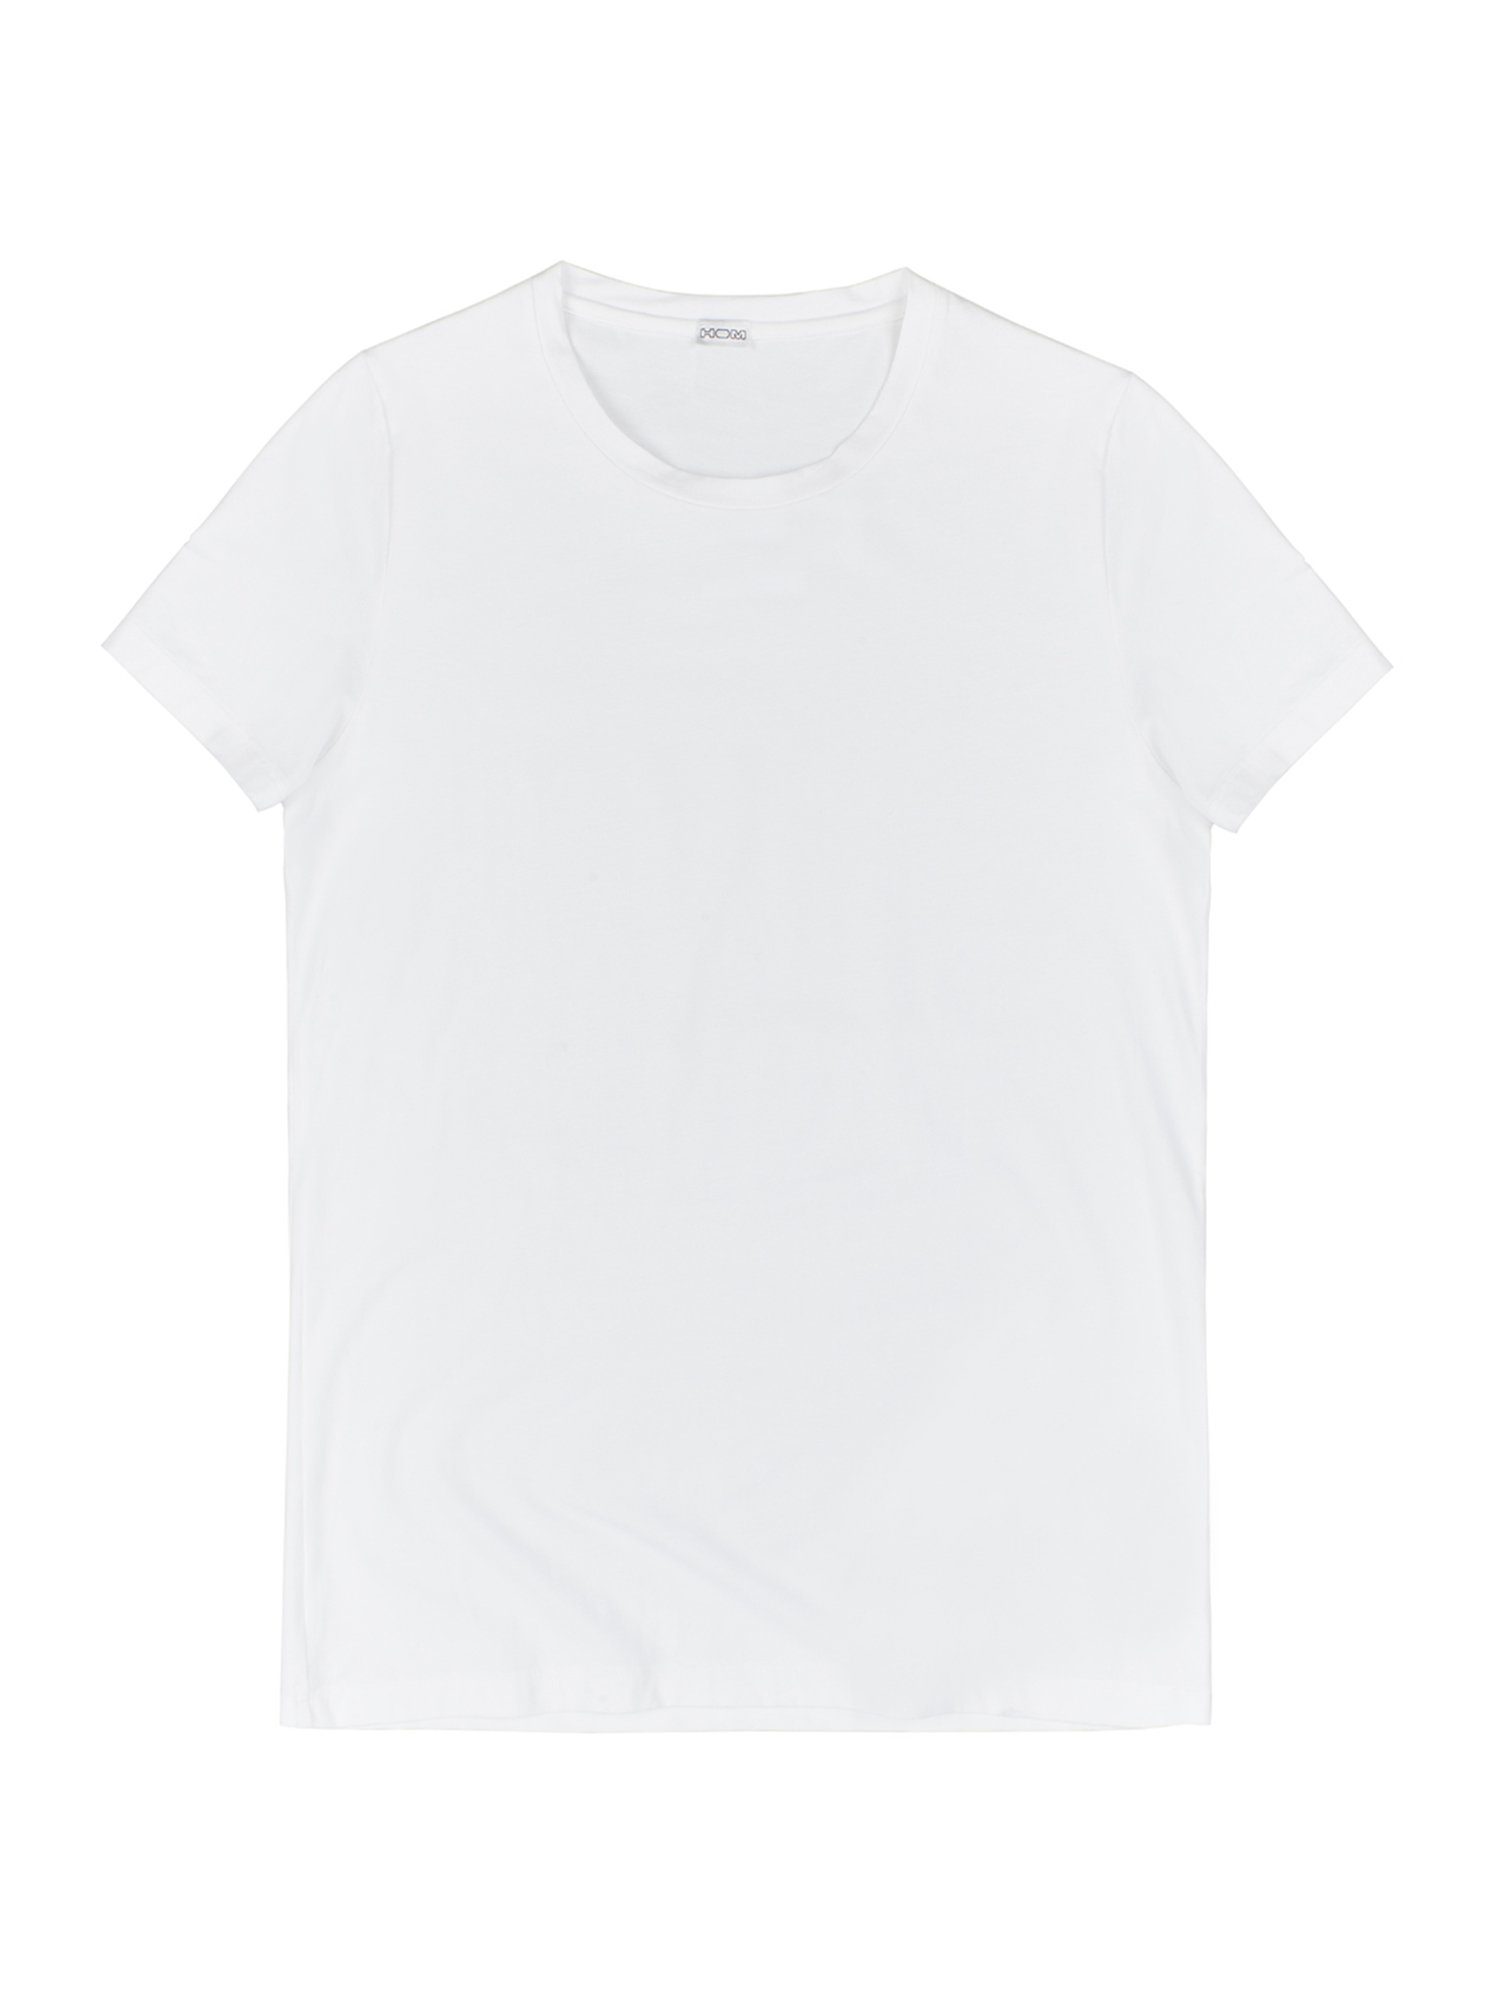 T-Shirt Hom Cotton Cupreme Neck Crew white